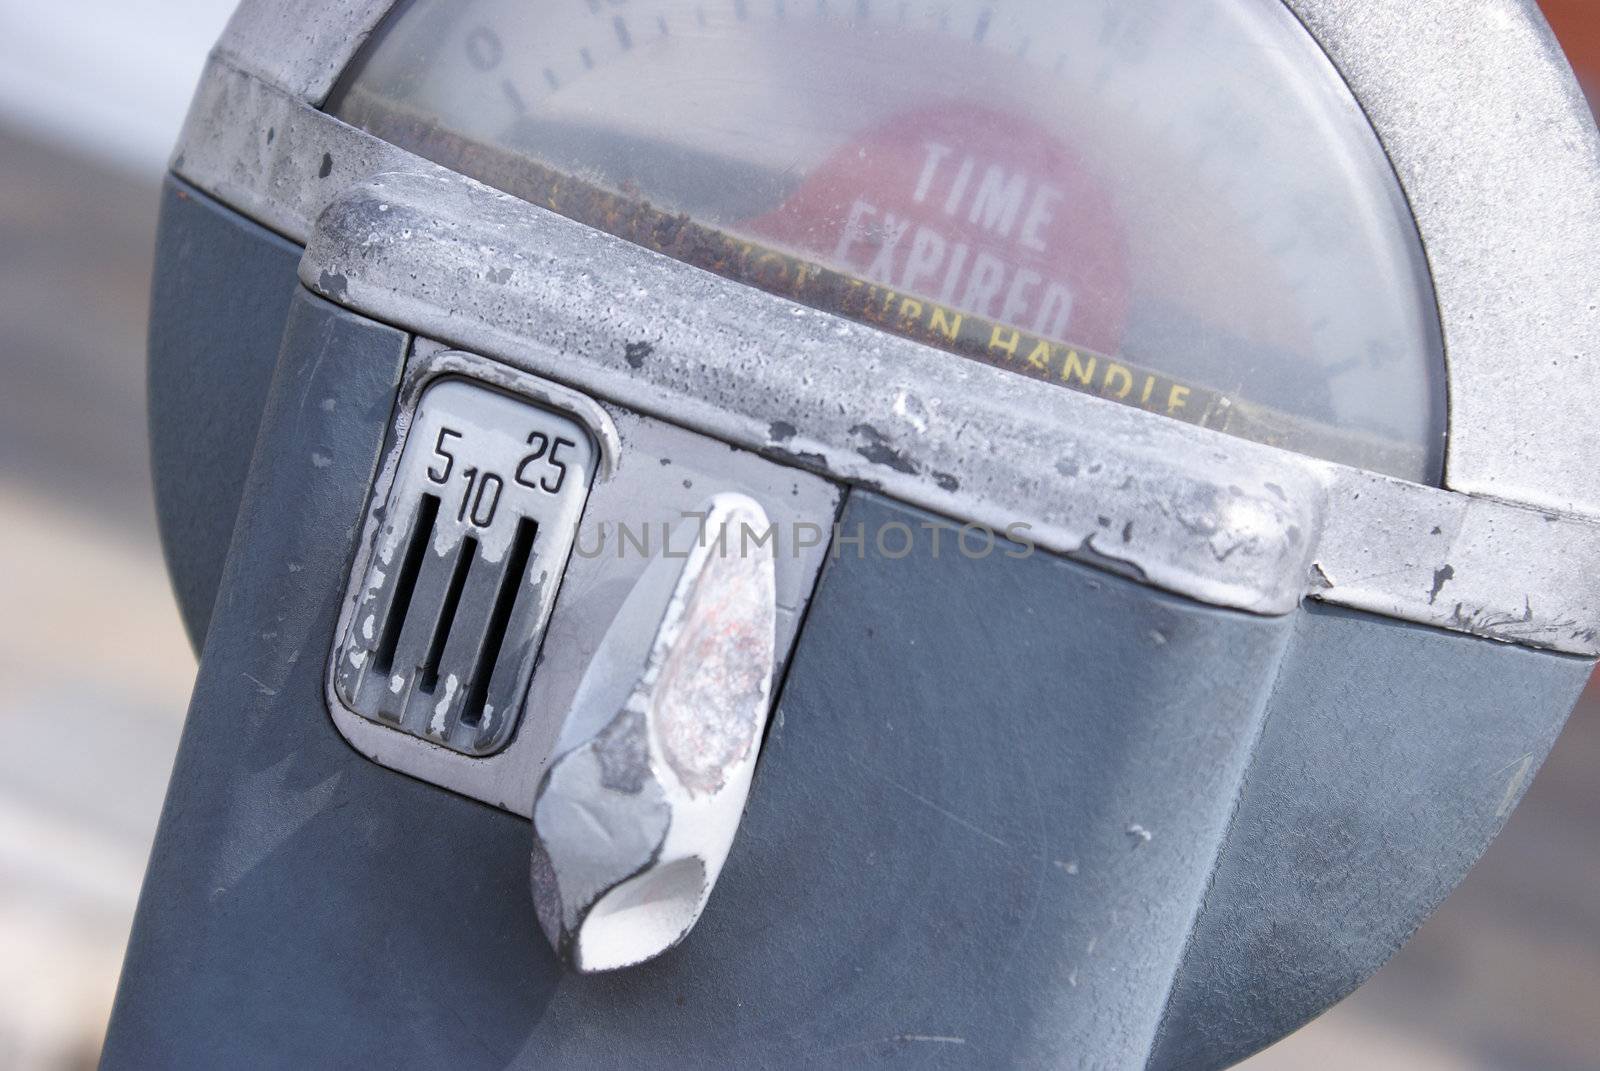 A macro shot of an older style parking meter.